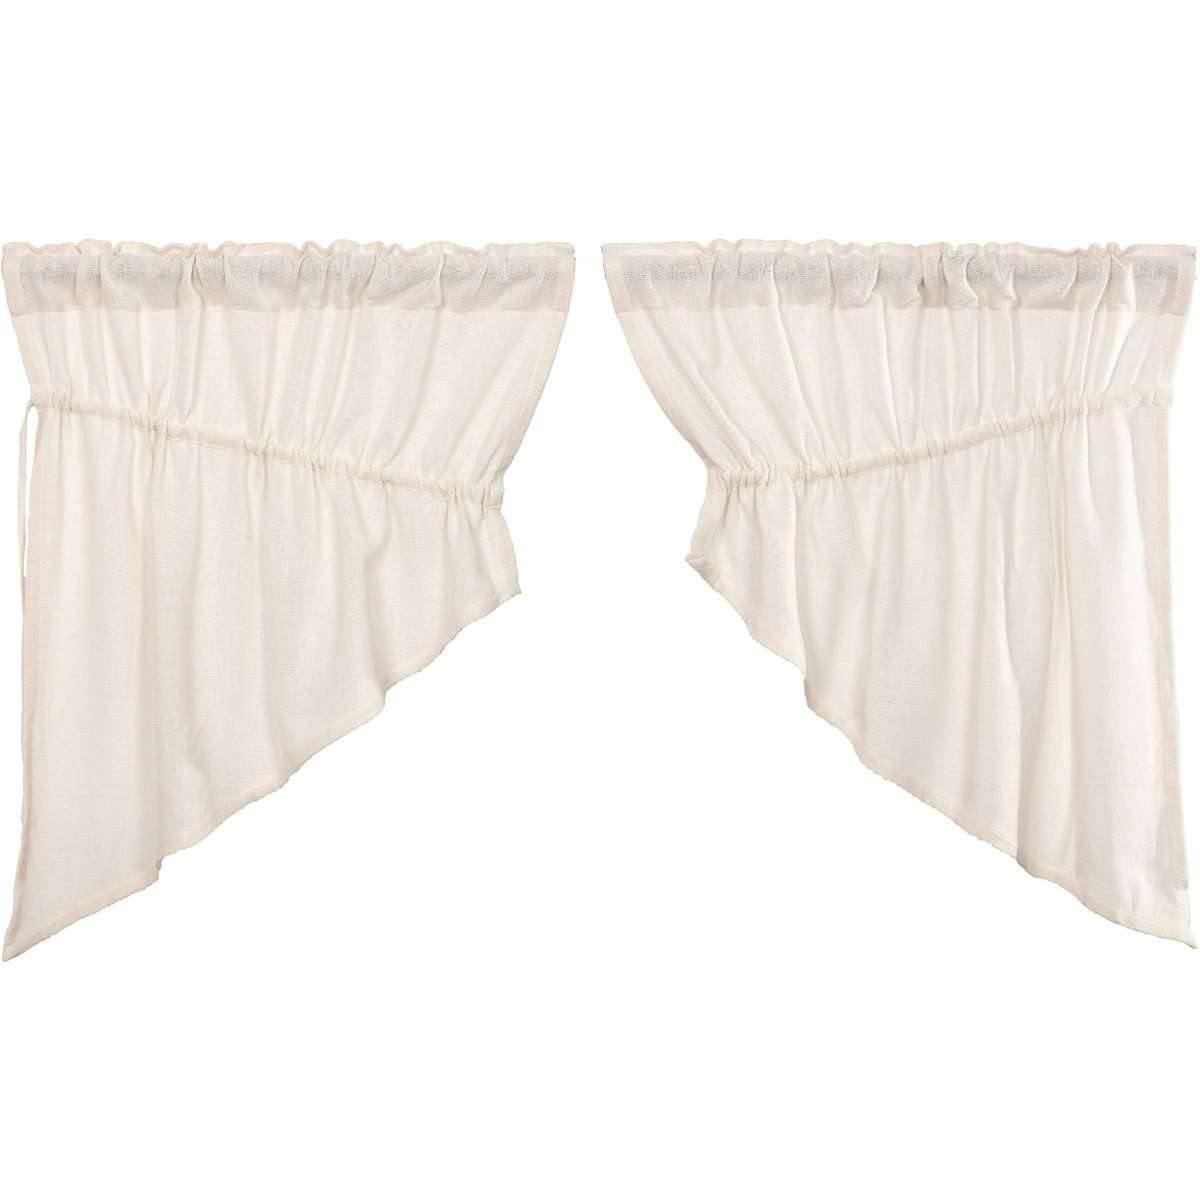 Burlap Antique White Prairie Swag Curtain Set of 2 36x36x18 VHC Brands - The Fox Decor